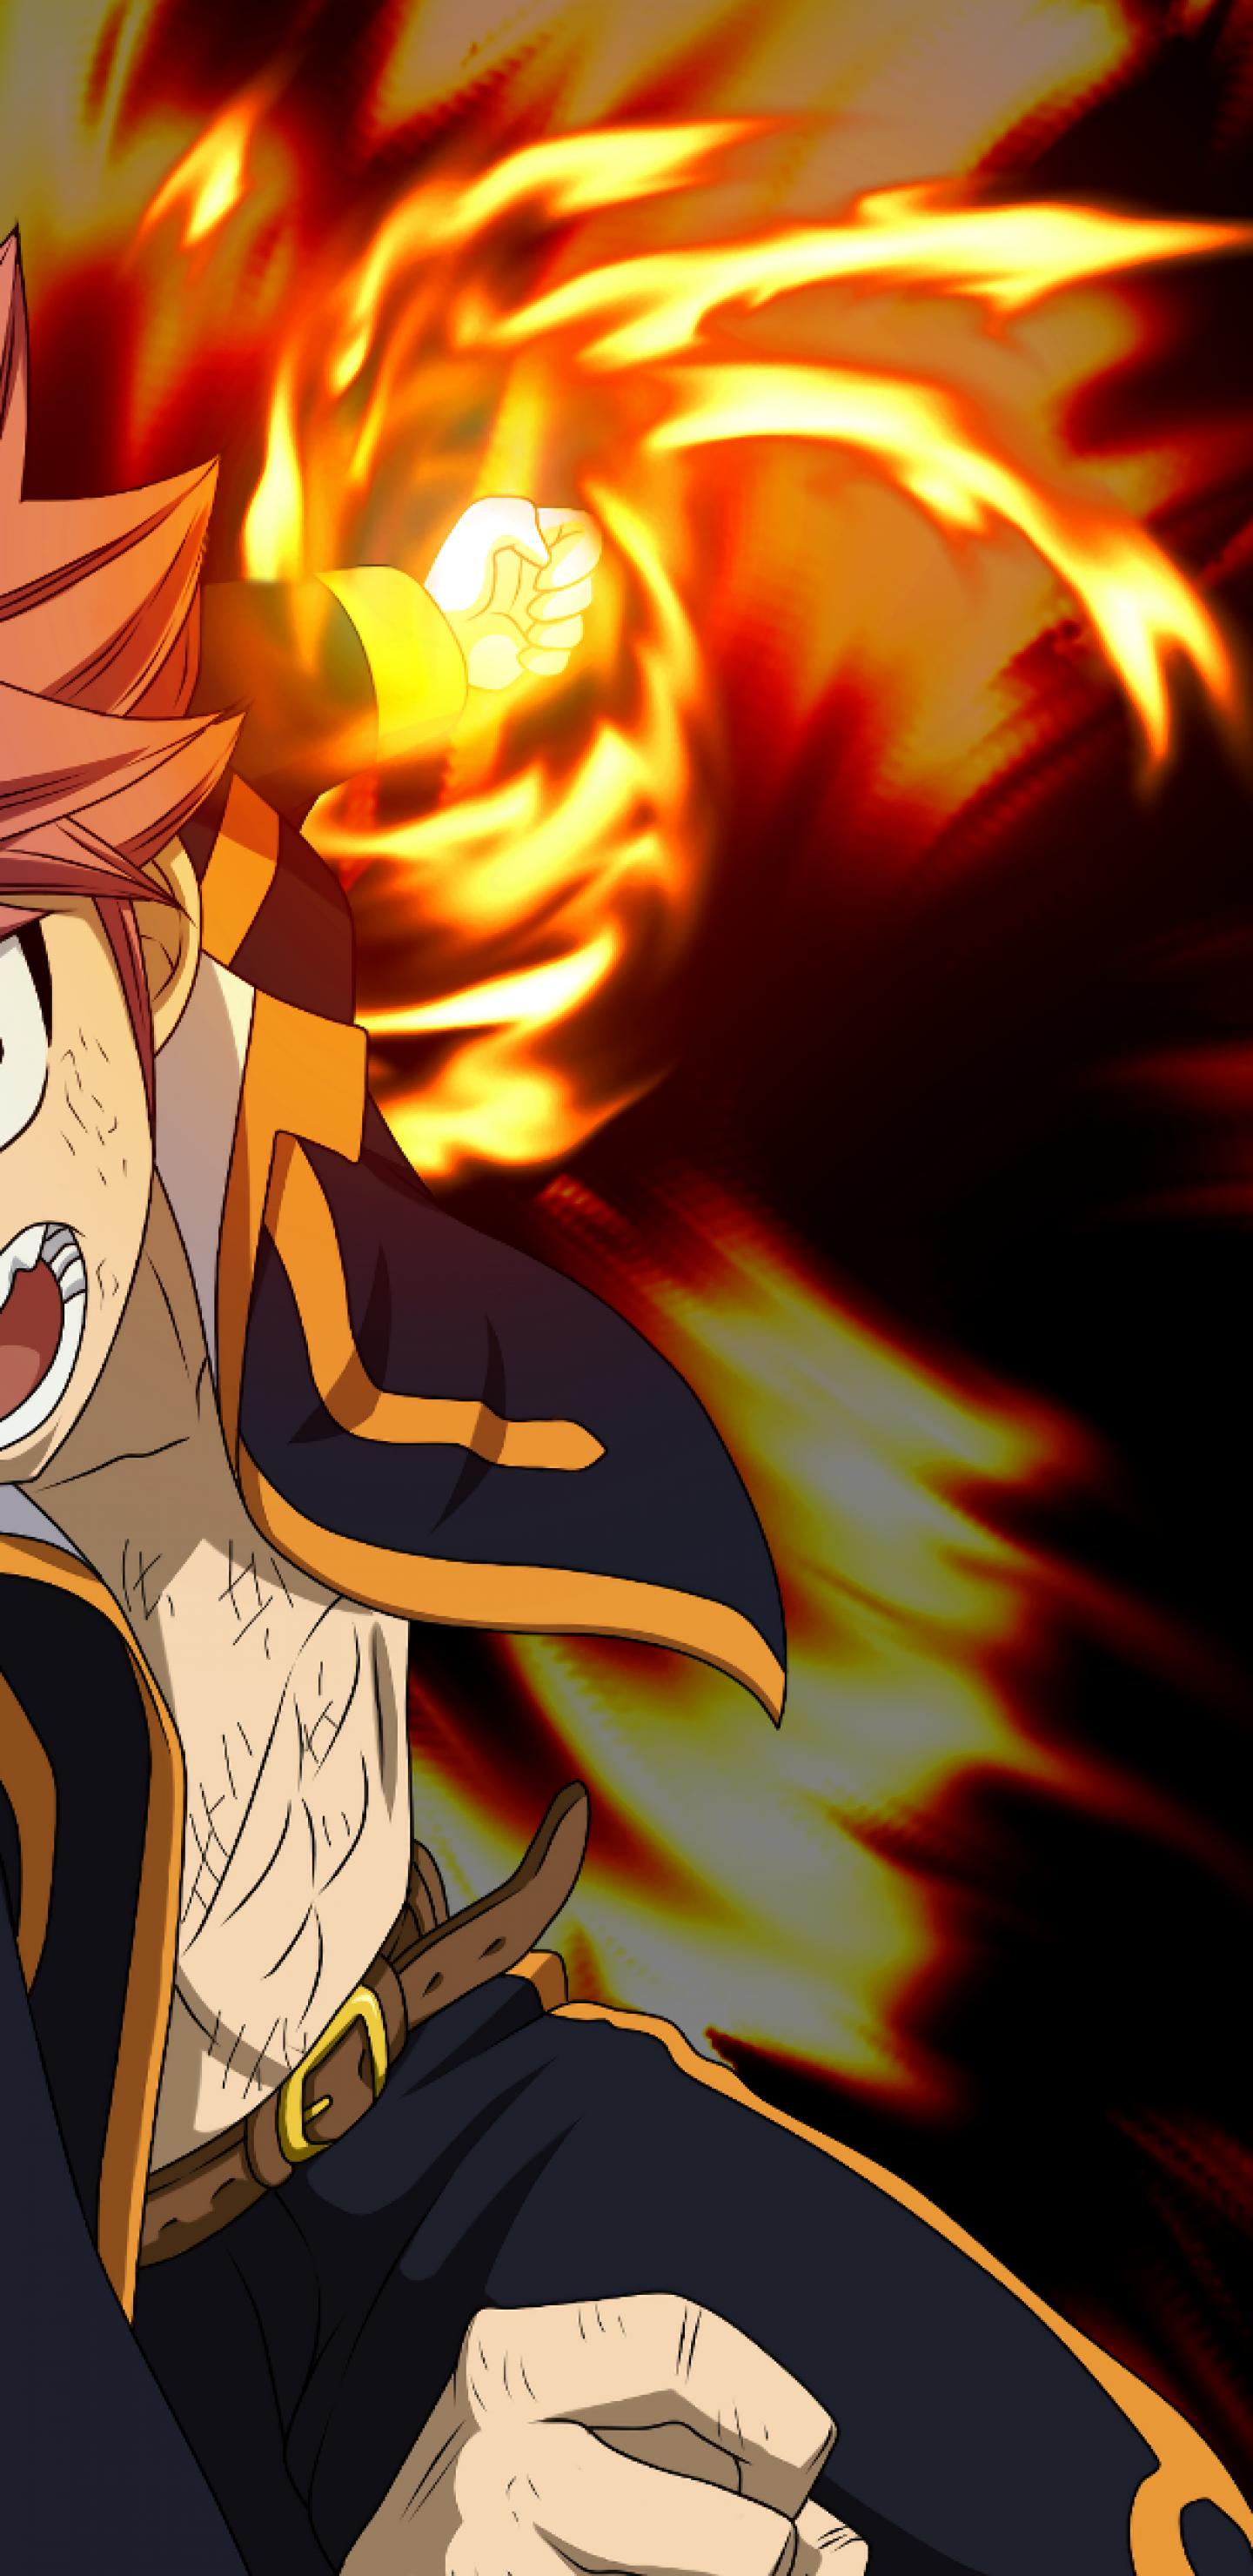 Fairy Tail, Natsu Dragneel, Attack, Flames - Natsu Dragneel Wallpaper Android - HD Wallpaper 